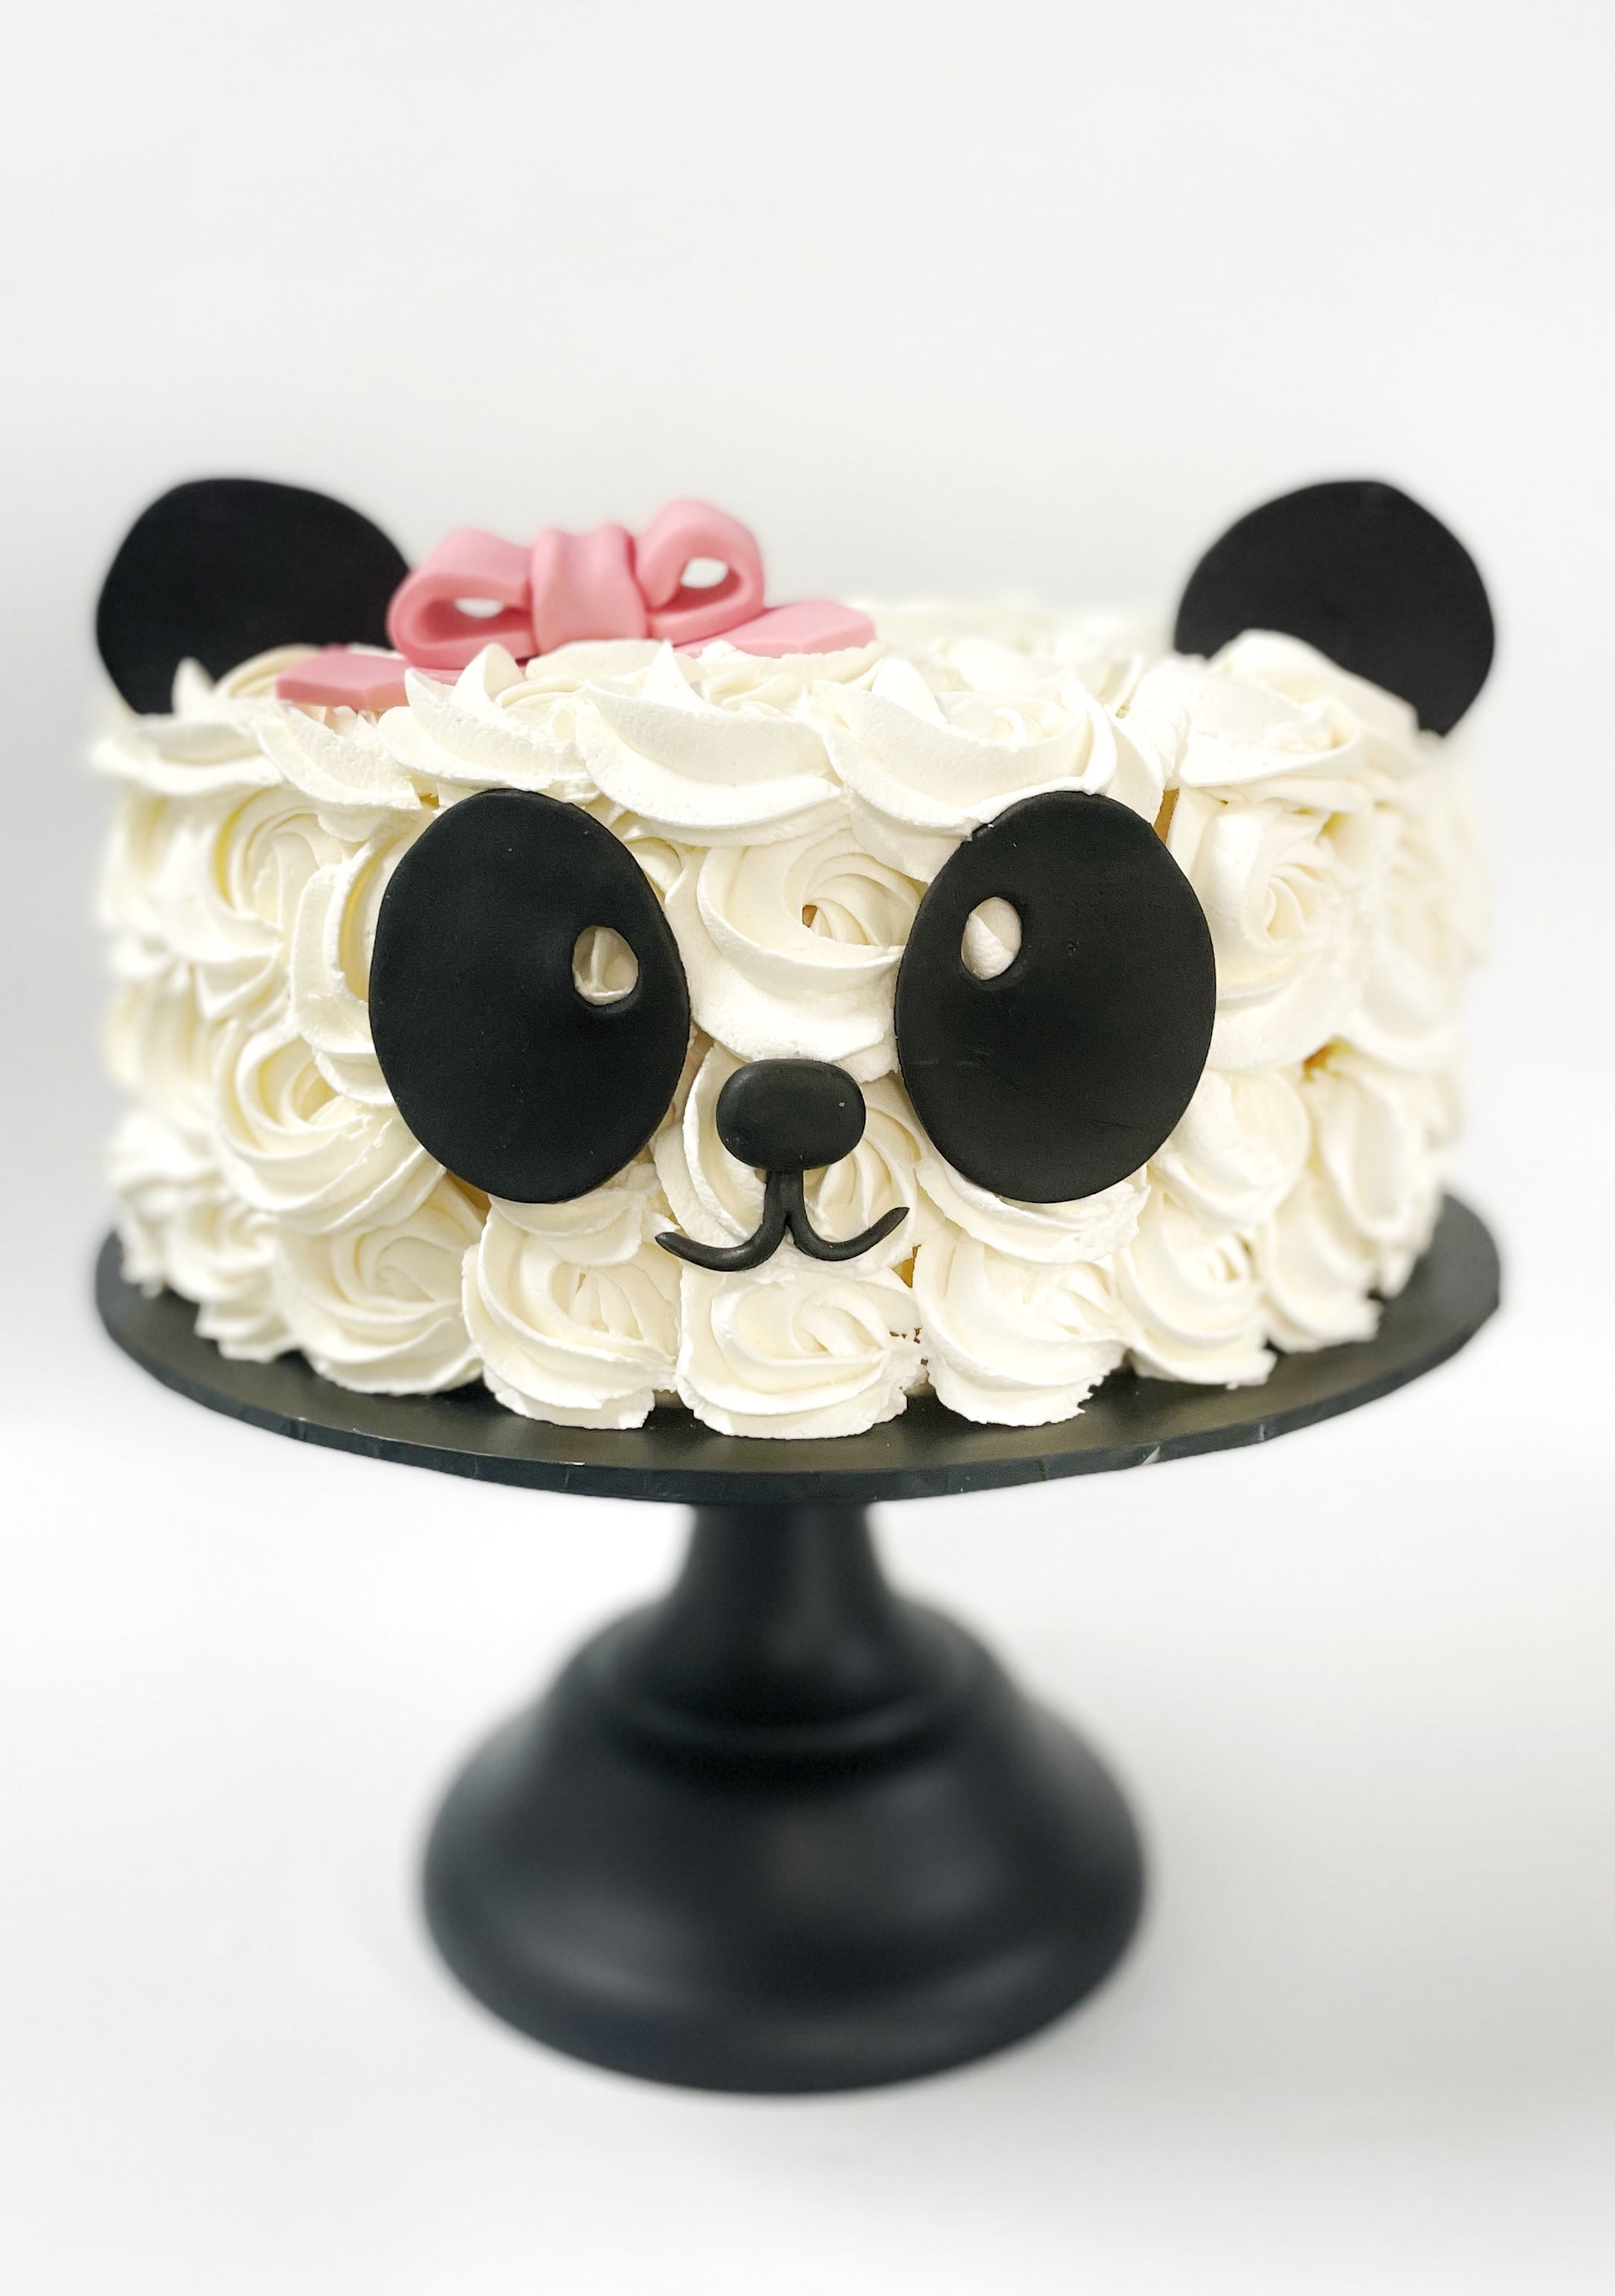 Online Cute Panda Face Designer Cake Delivery in Noida